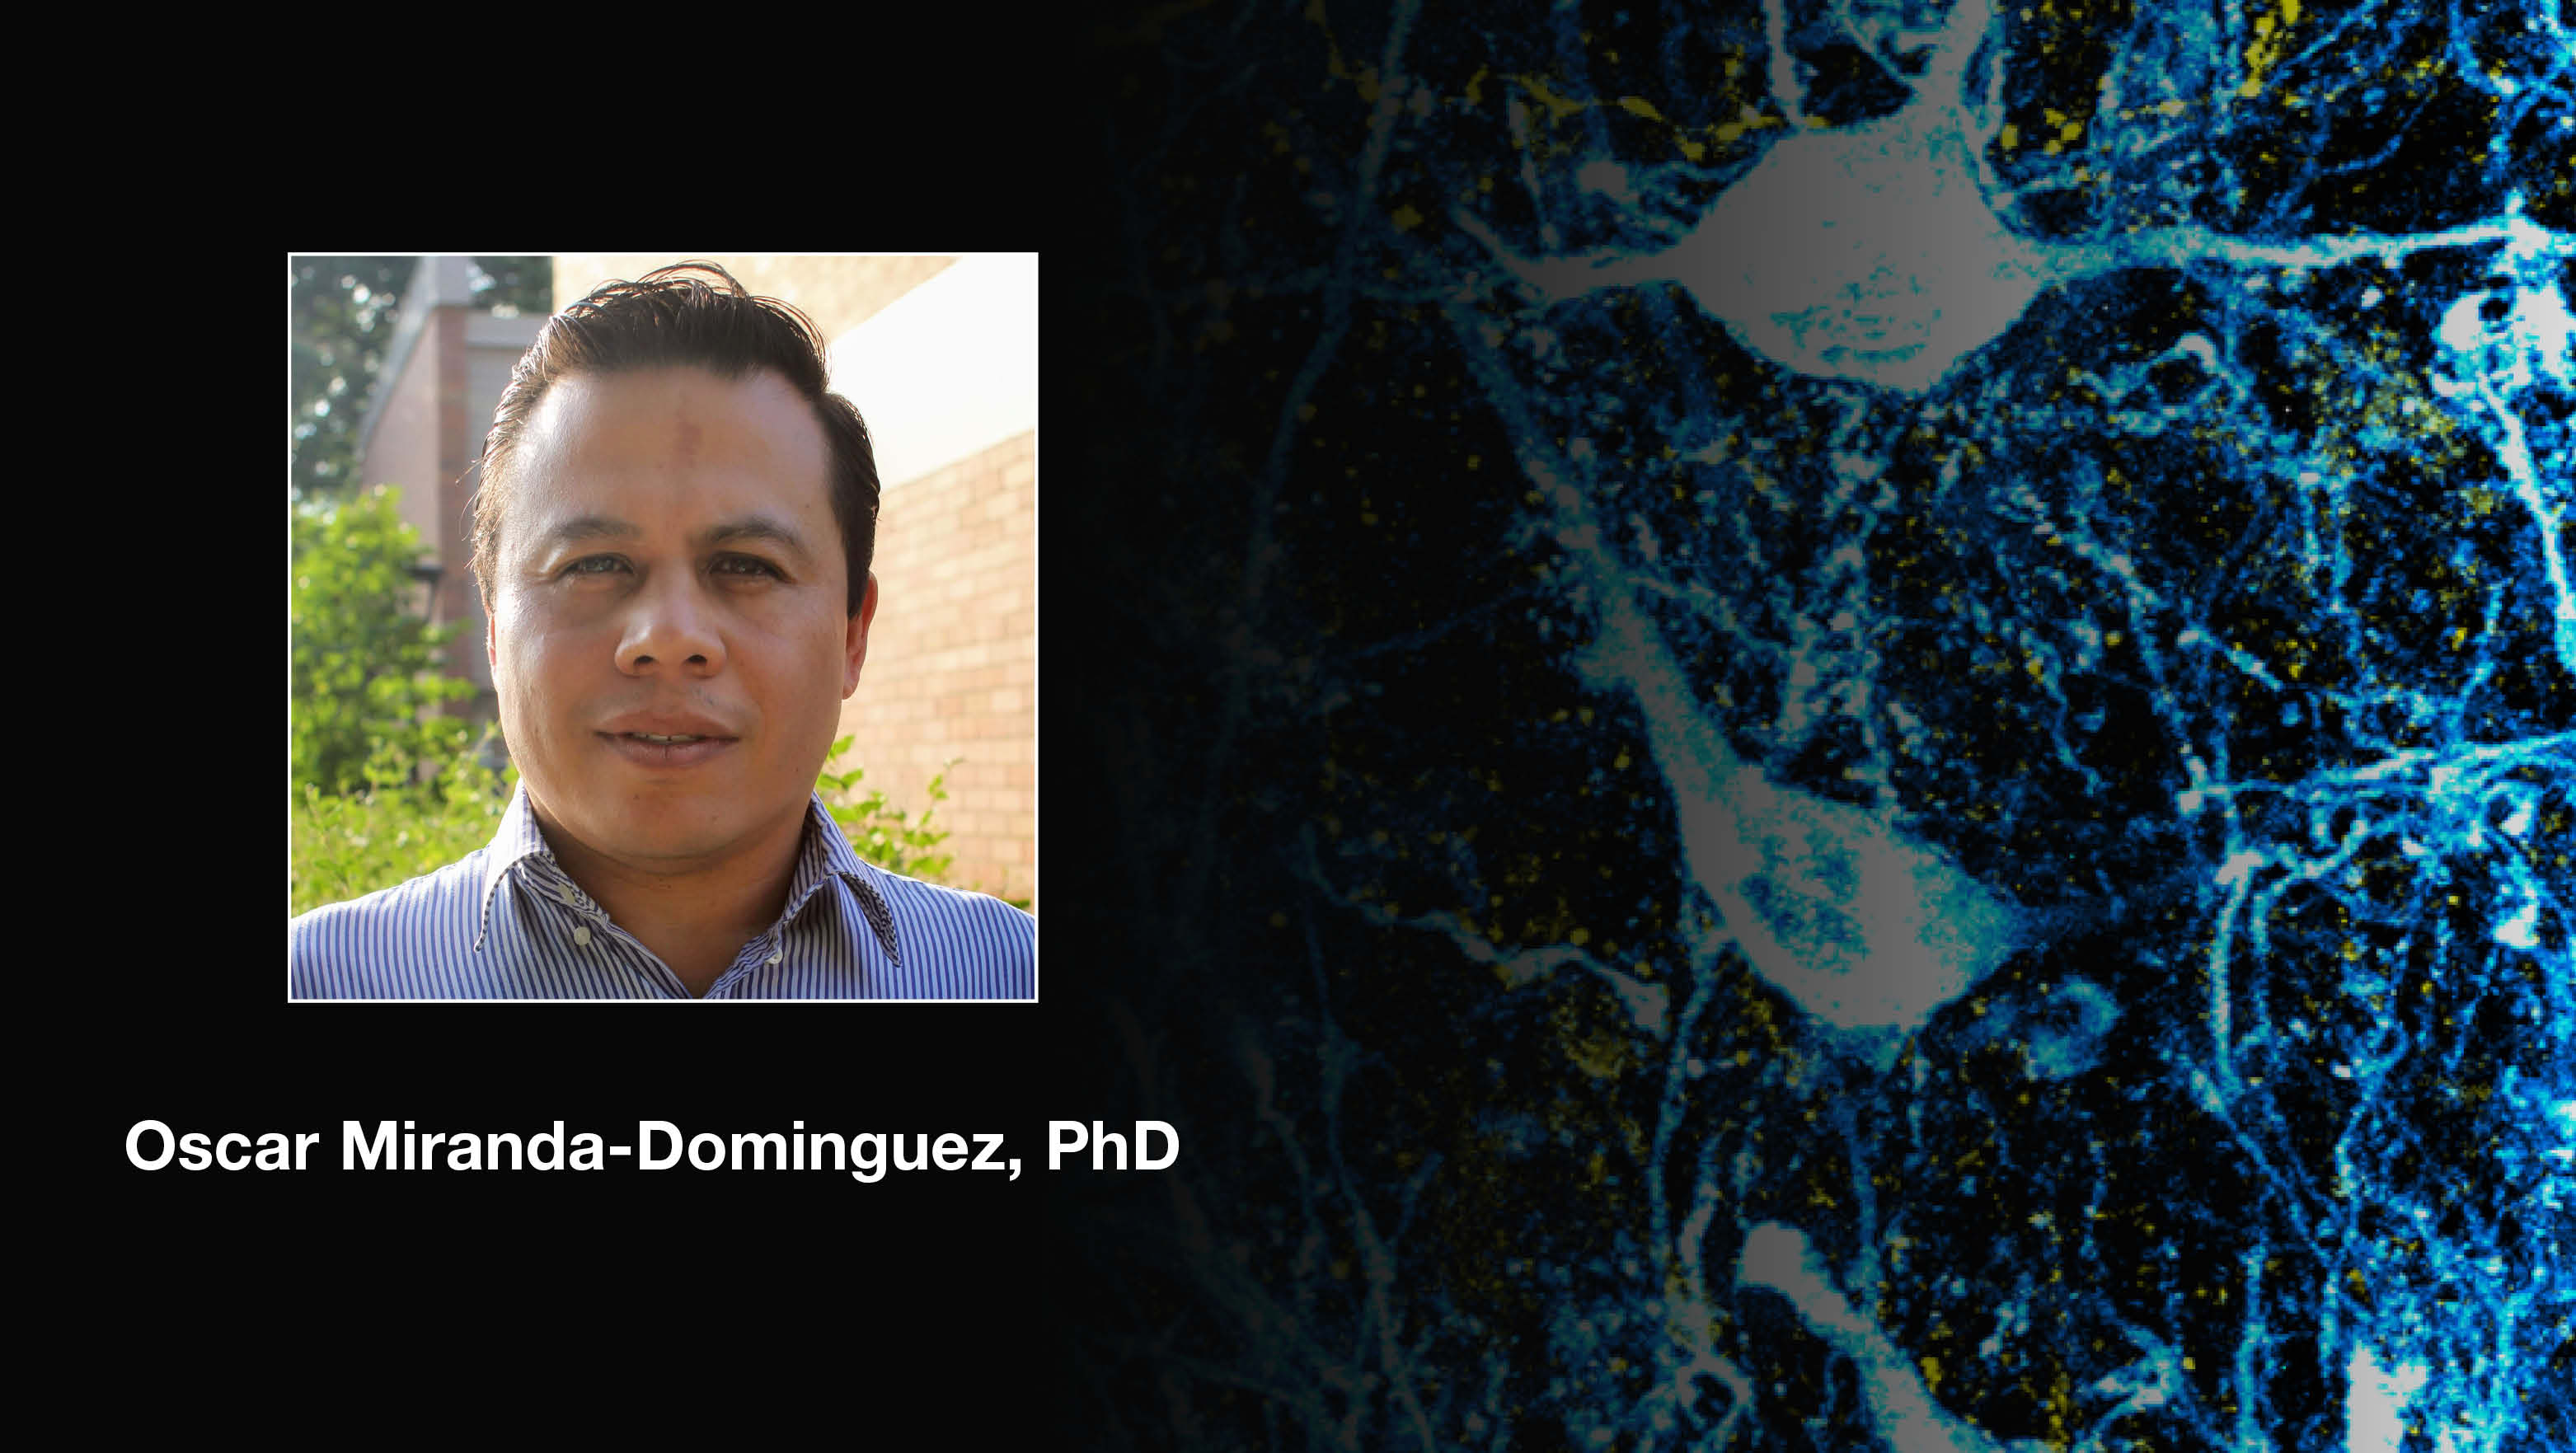 Headshot of Oscar Miranda-Dominguez over a scientific image